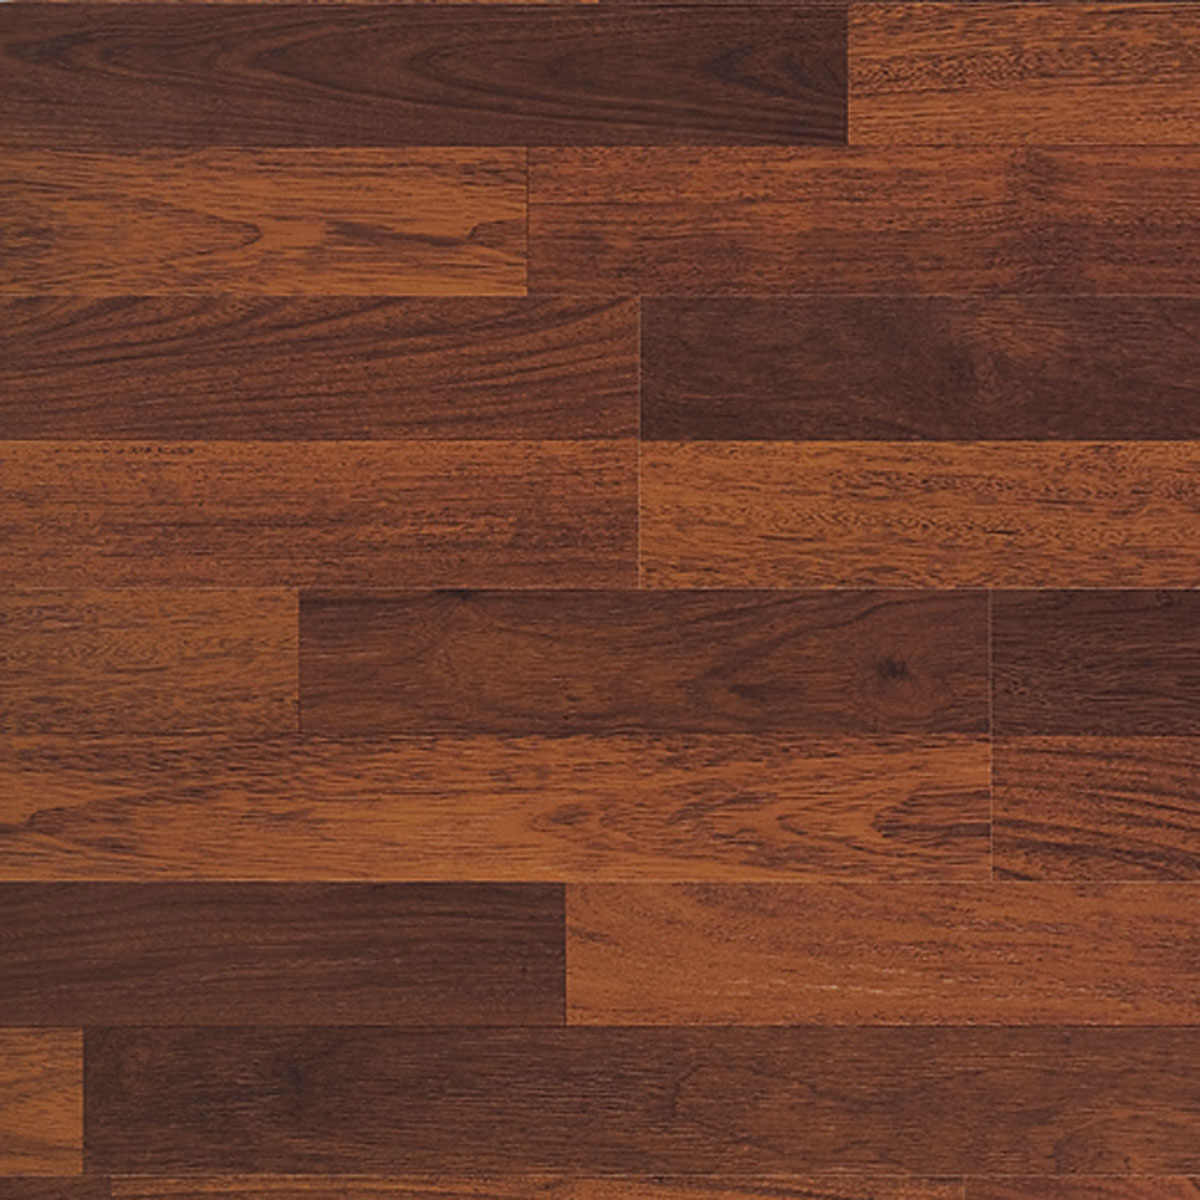 Sfu025 Hardwood Flooring Laminate Floors Floor Ca California